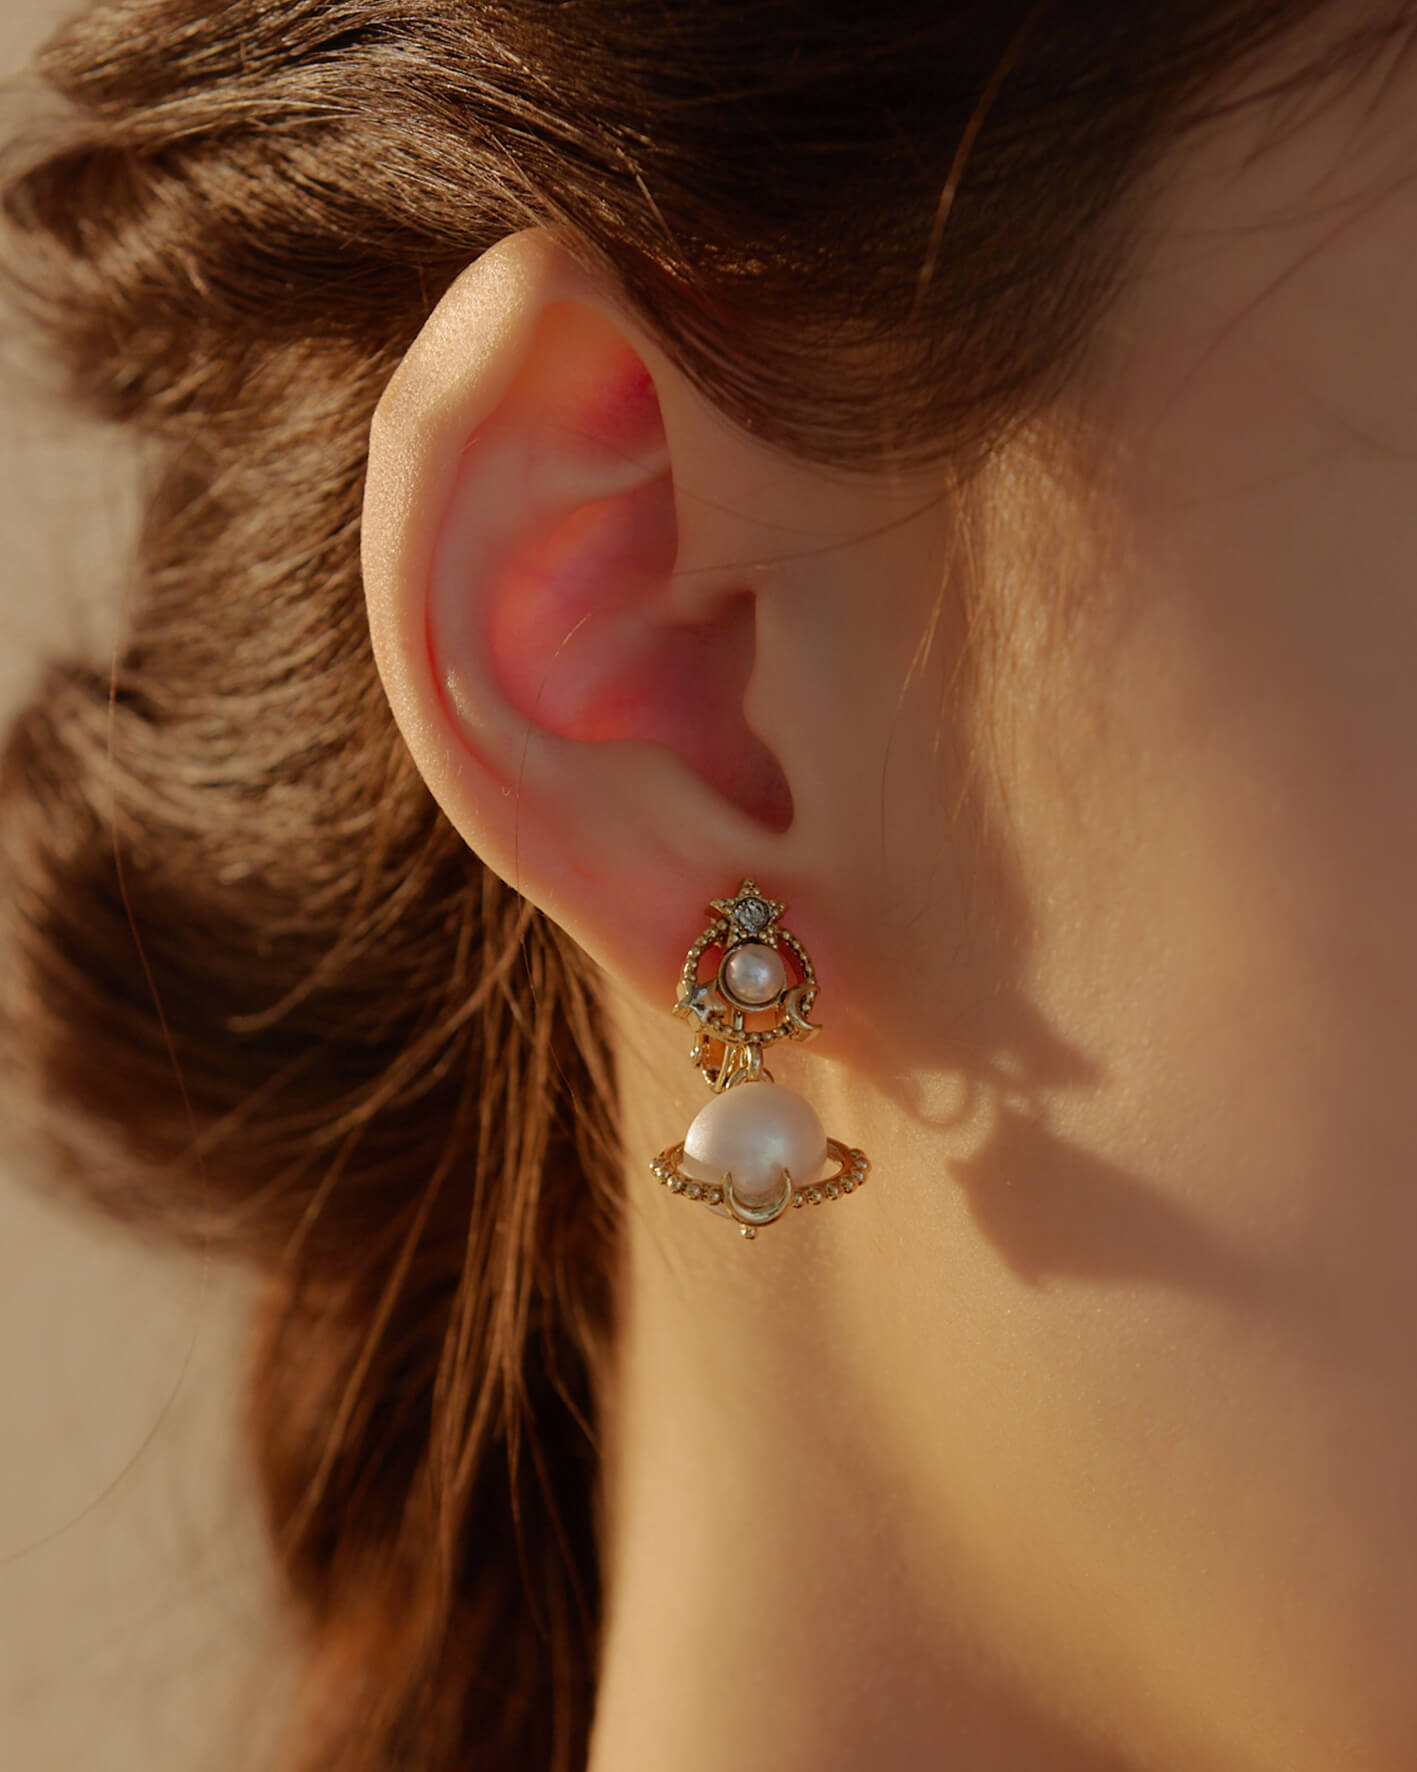 Eco安珂,韓國飾品,韓國耳環,螺旋夾耳環,可調式耳夾耳環,復古珍珠螺旋夾耳環,土星耳環